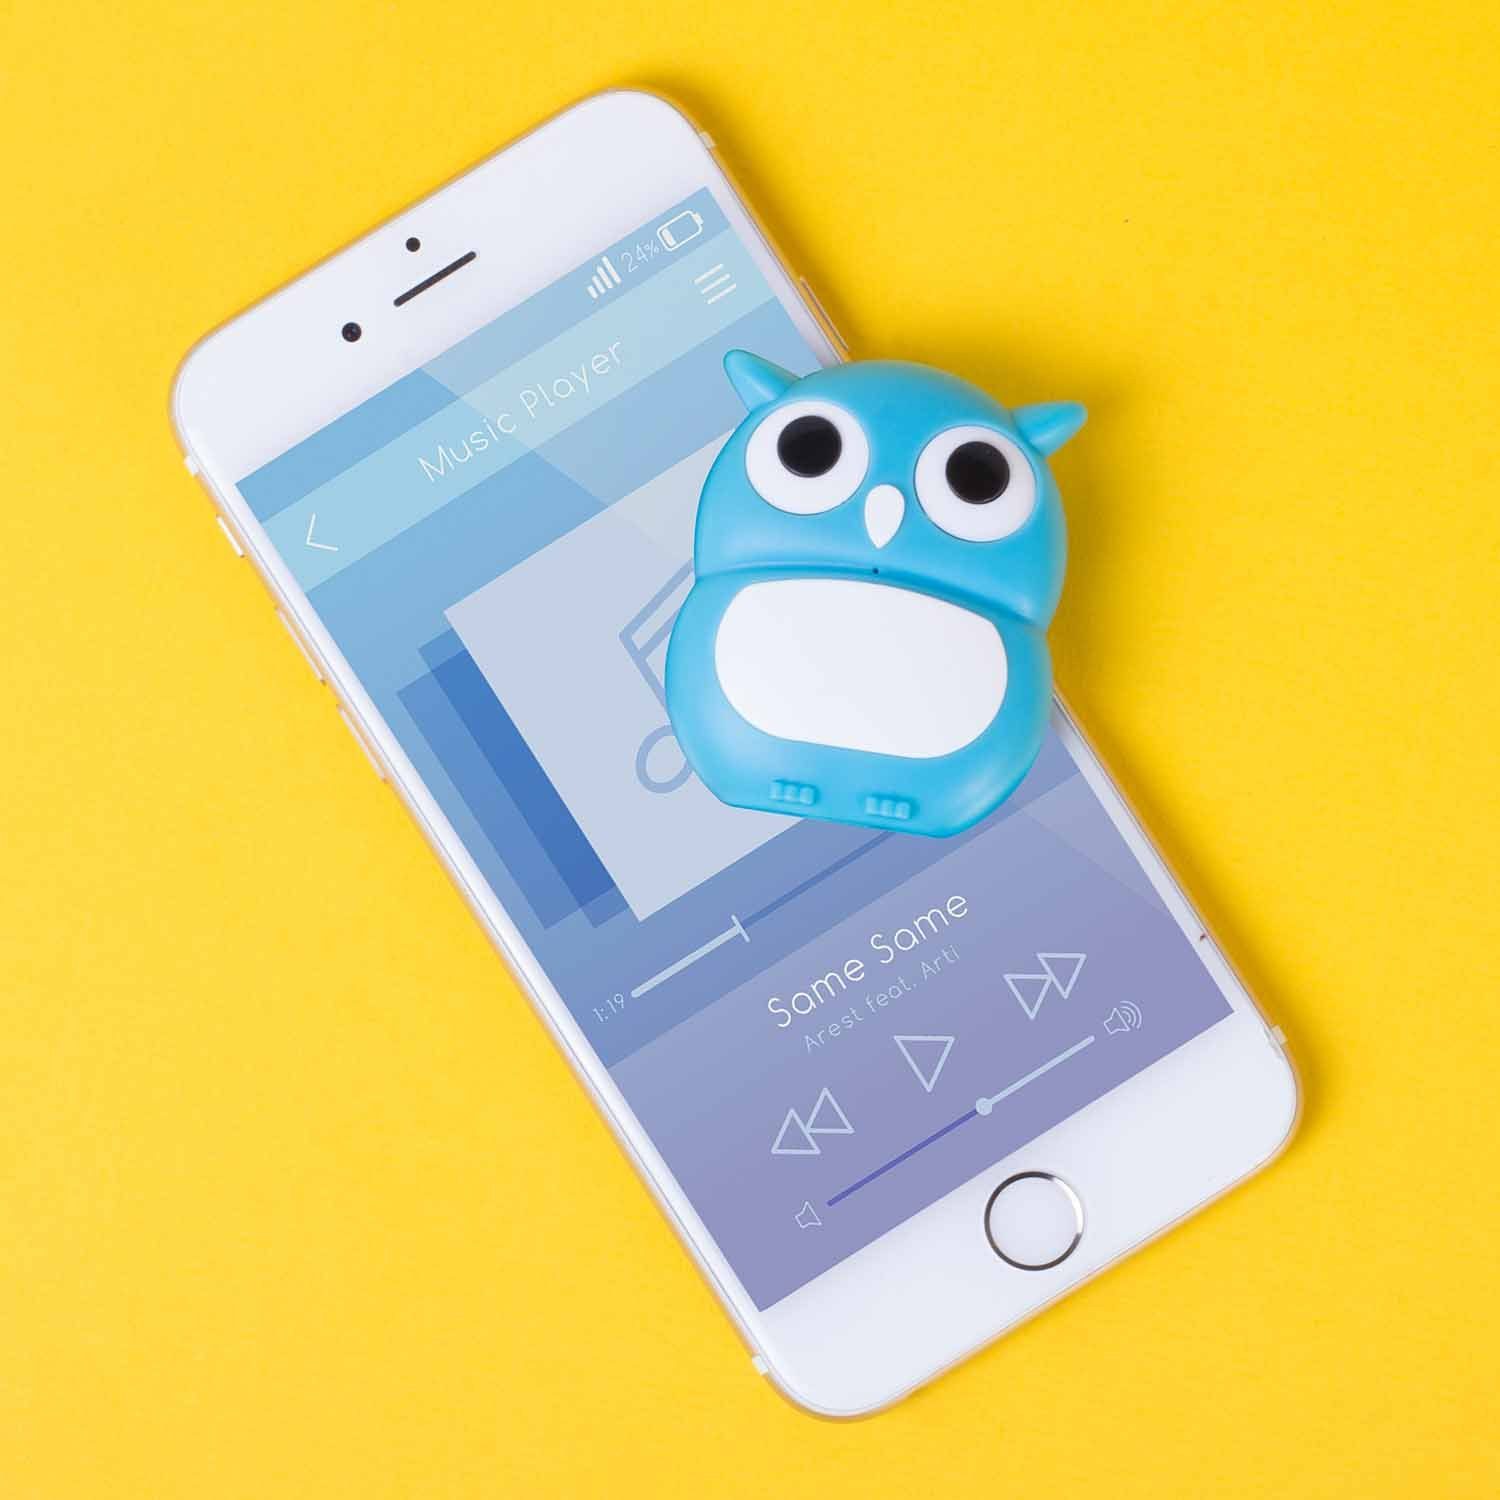 Thumbs Up Mini BT (Eule) Bluetooth-Lautsprecher Kamera-Auslöser Owl mit - Speaker Alarmfunktion und